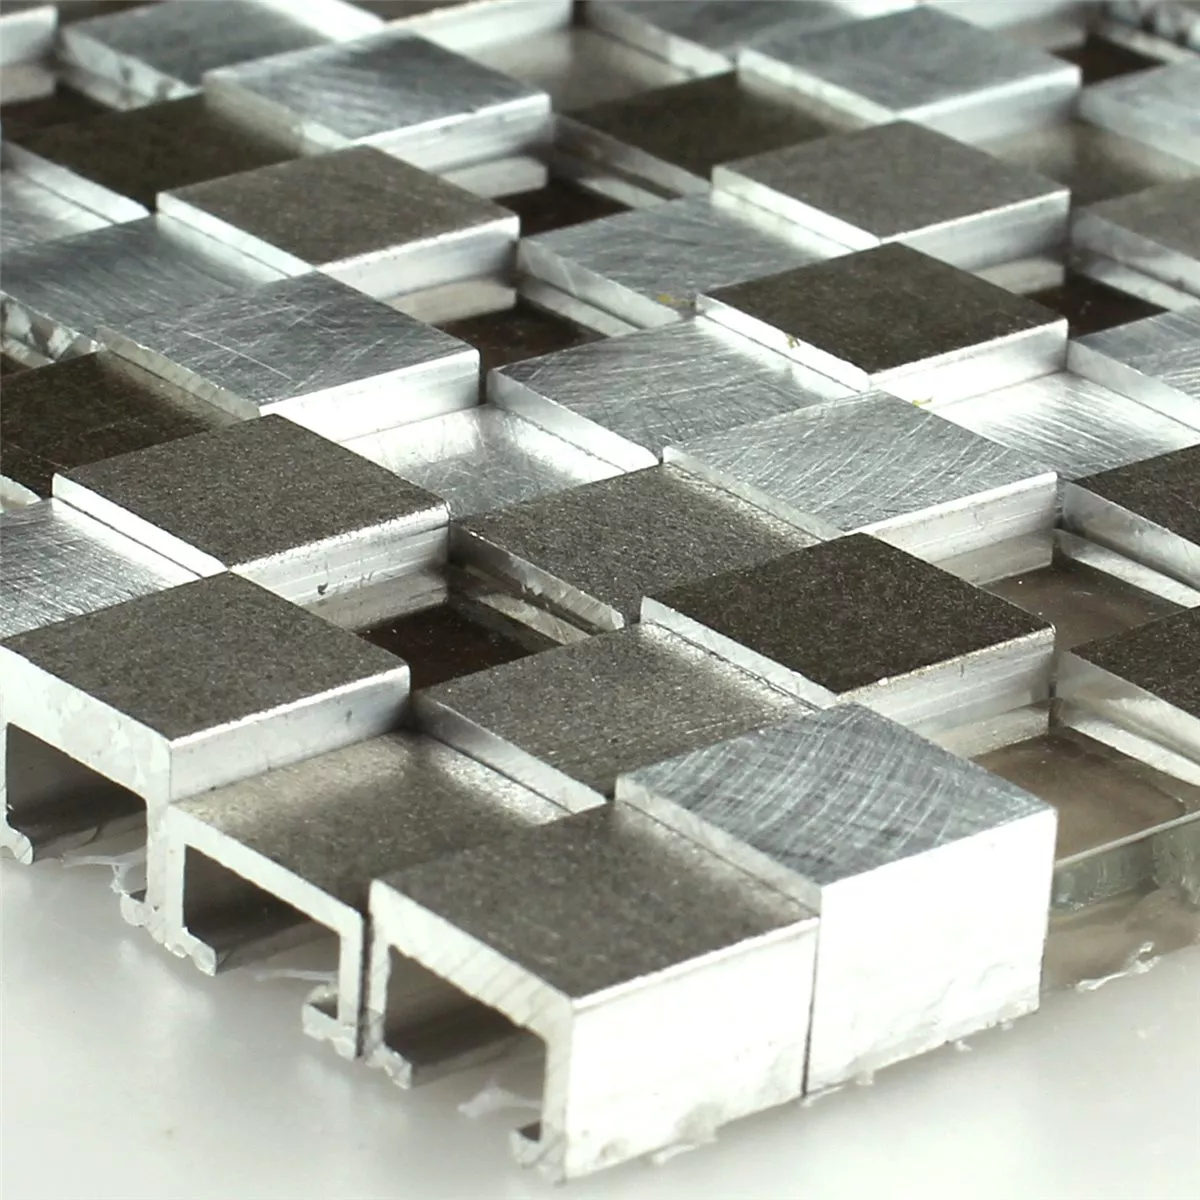 Sample Design Tiles Aluminium Alu Glass 3D Mosaic